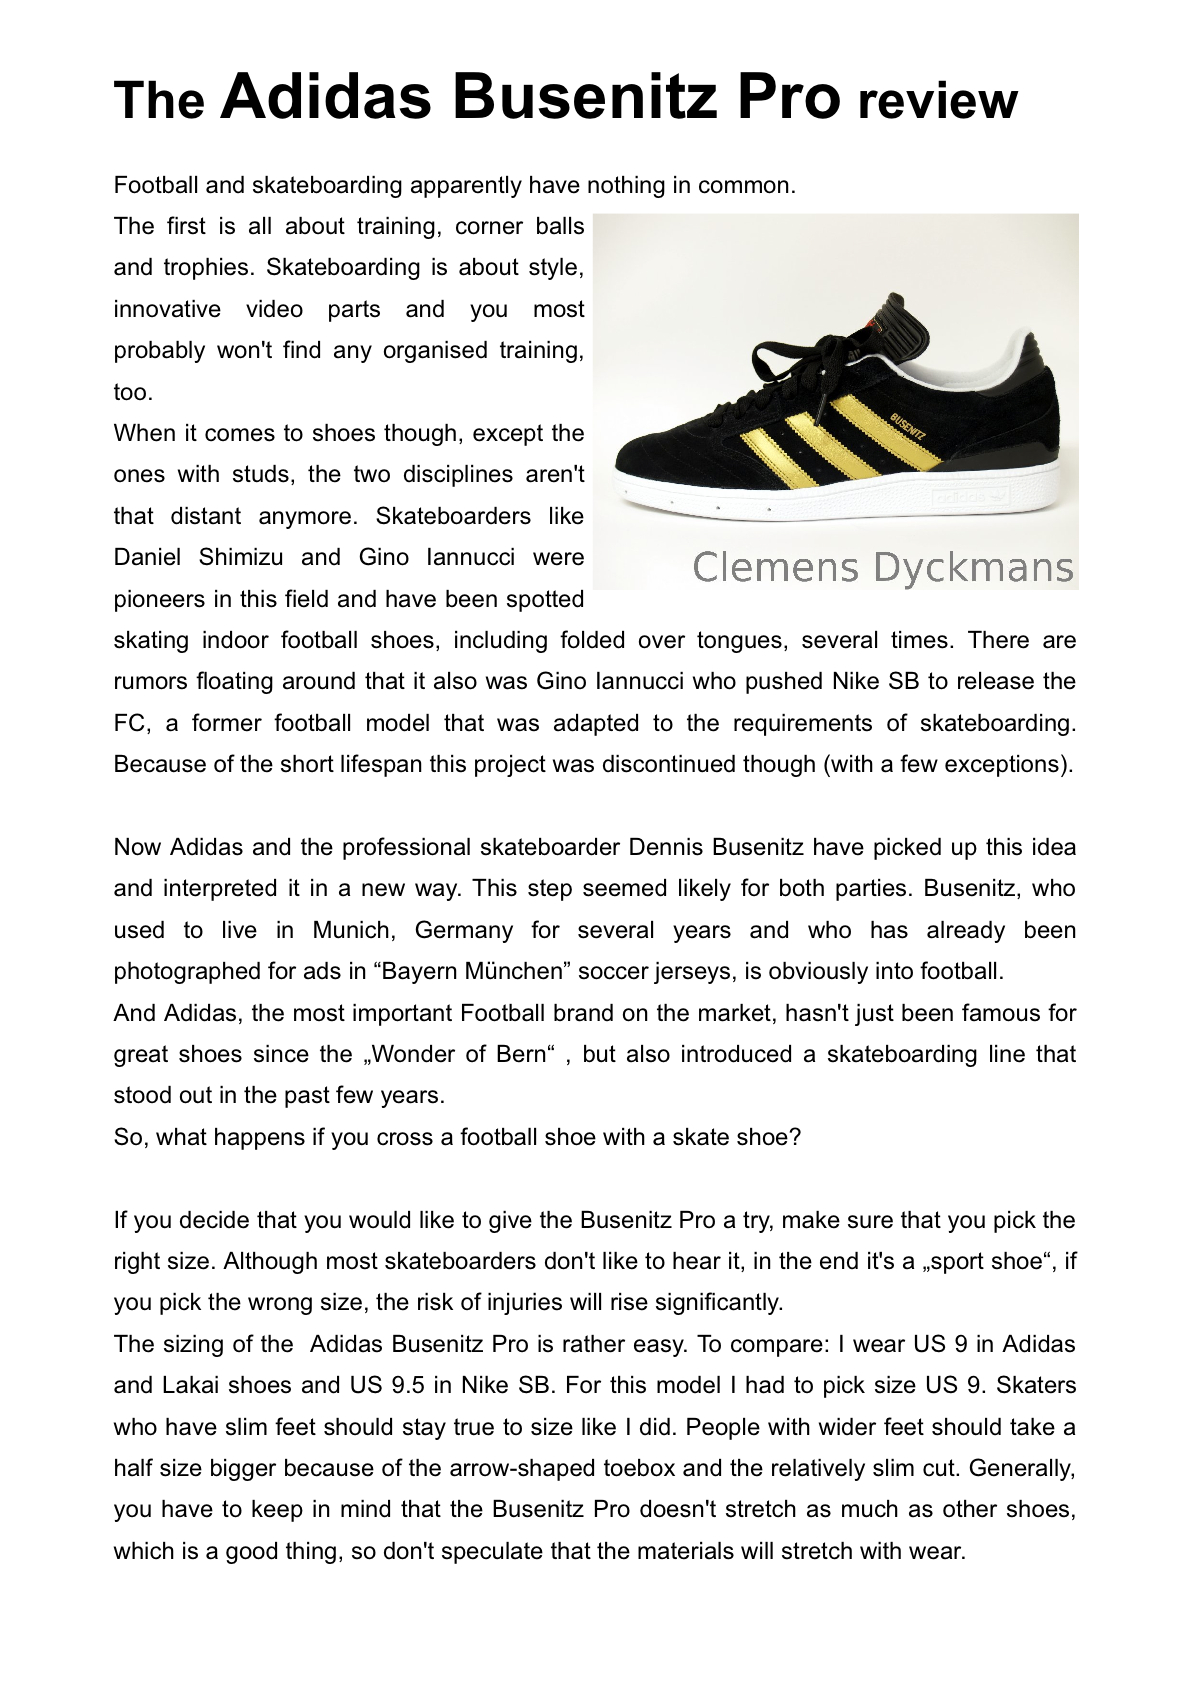 foso Loco Secretario Adidas Busenitz Pro - Weartested - detailed skate shoe reviews